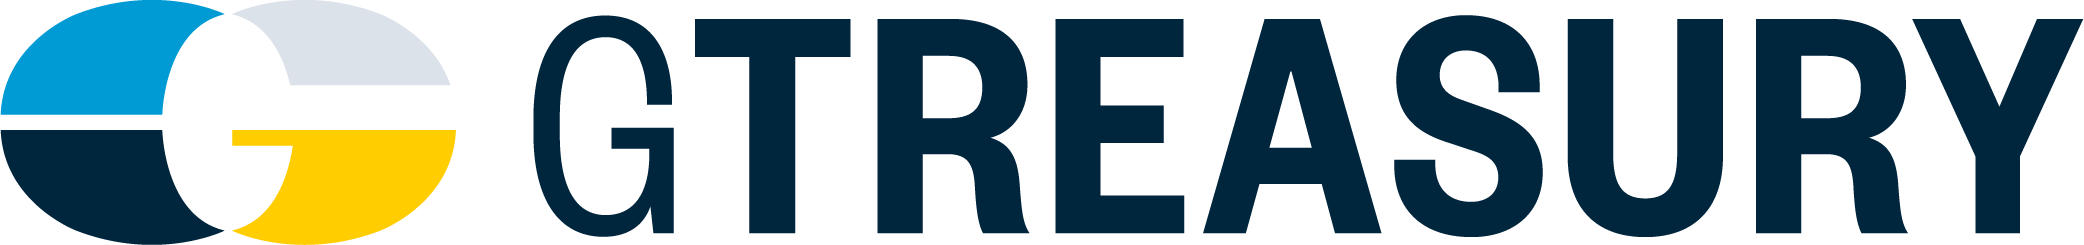 GTreasury - Logo.png